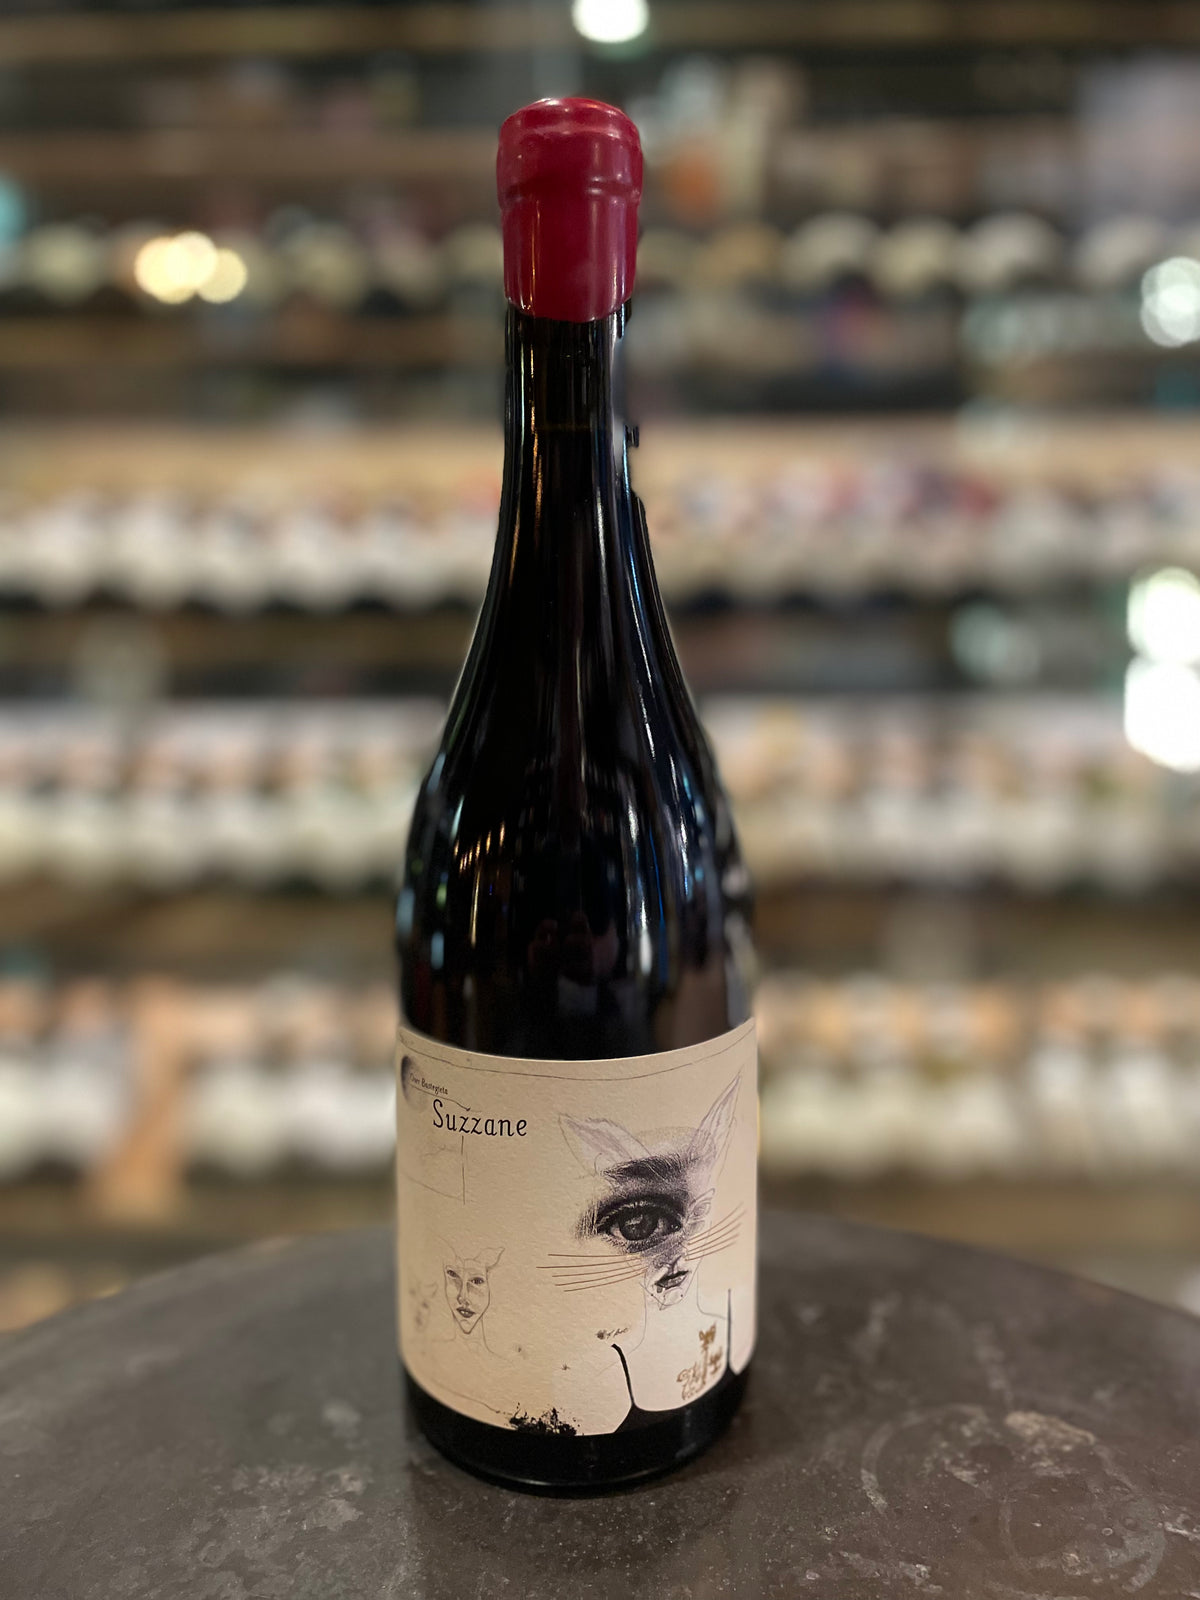 Oxer Bastegieta Suzzane Old Vines, Rioja DOCa, Spain, 2019